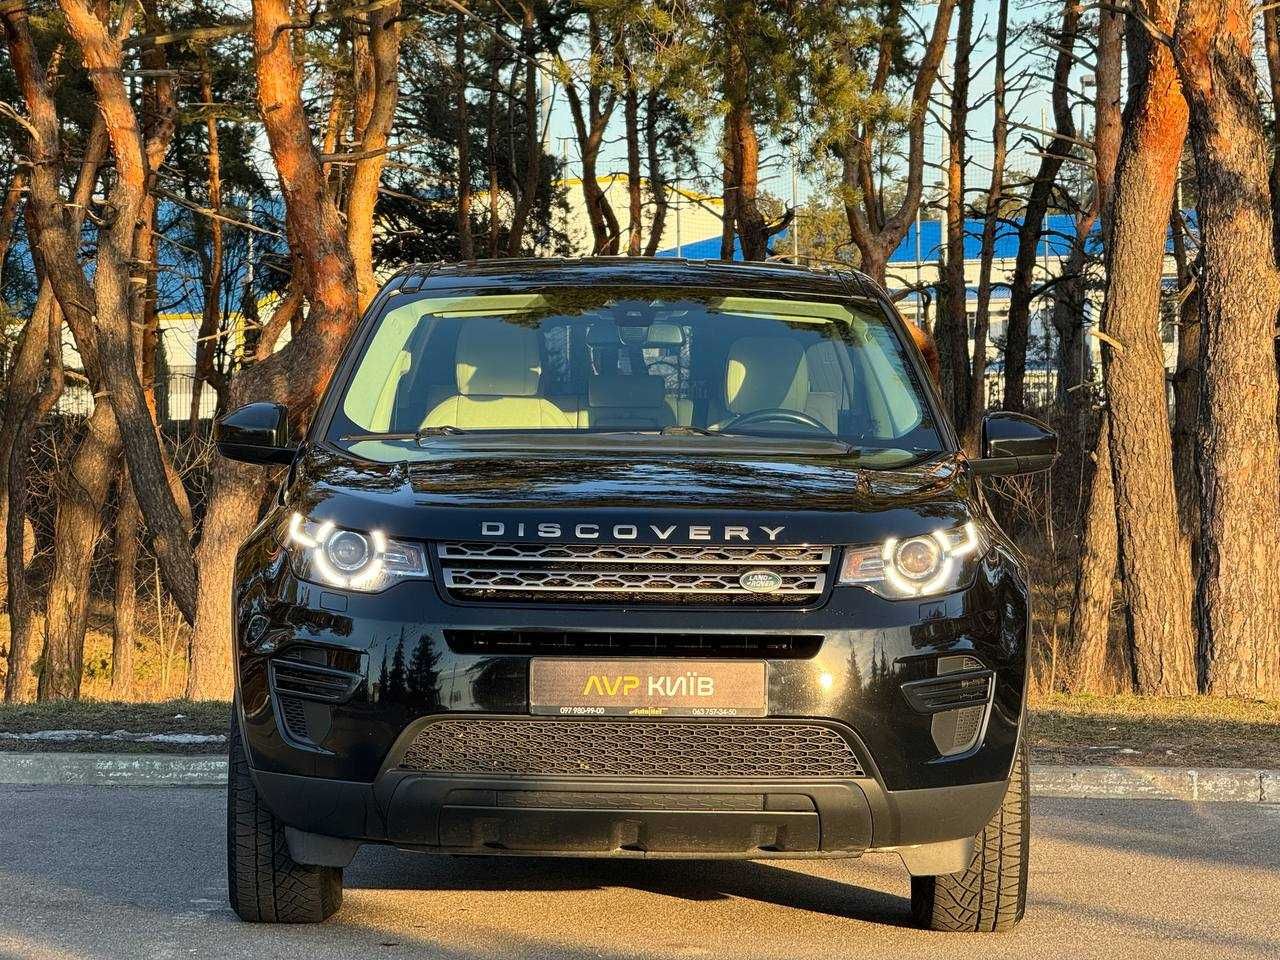 Land Rover Discovery Sport 2018 рік, 2.0 дизель, автомат,4WD,121 т.км.